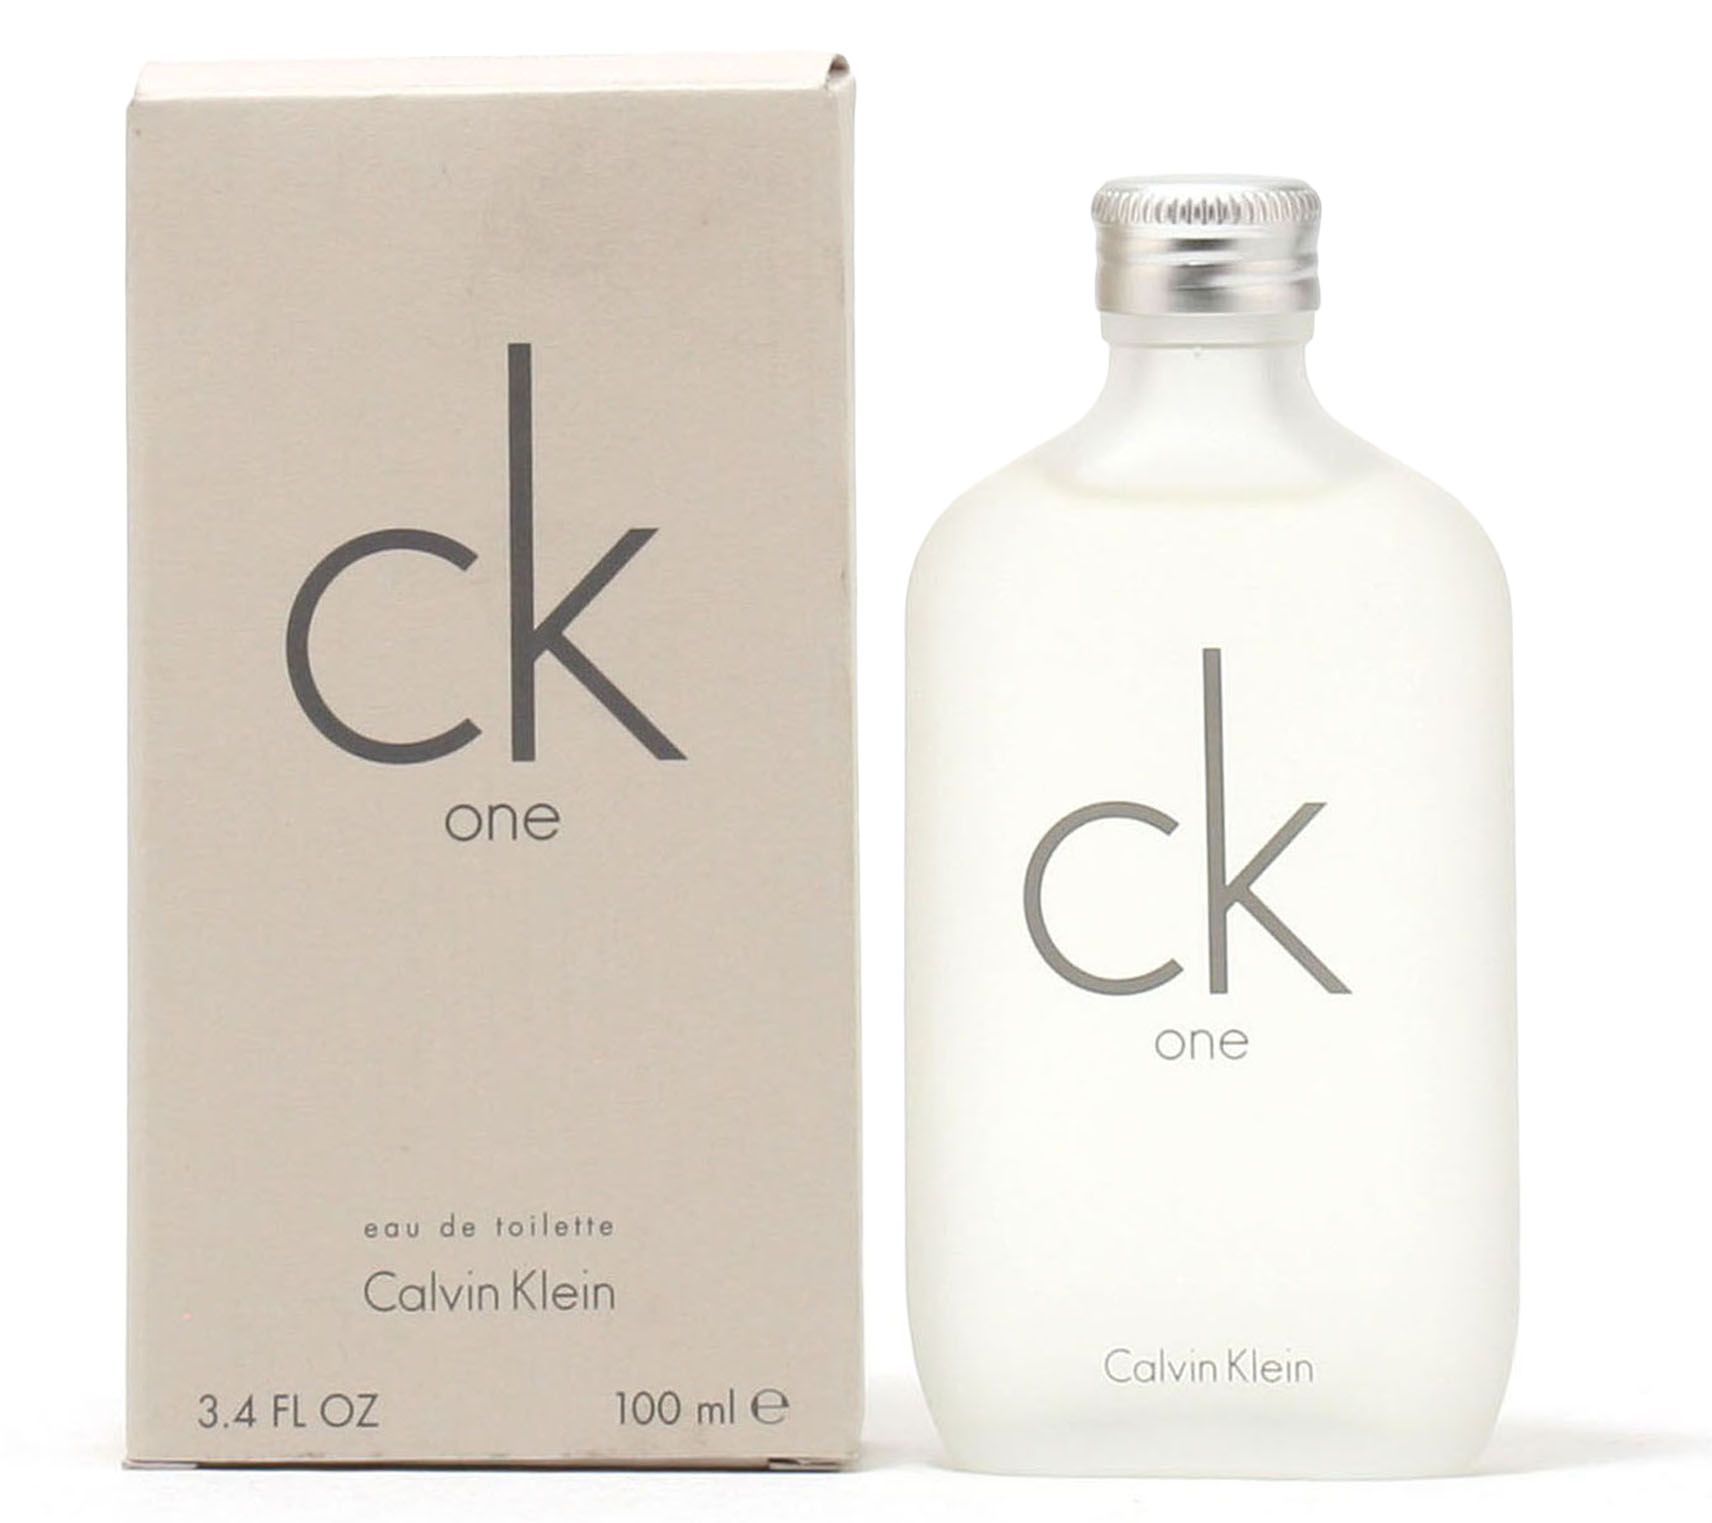 CK ONE parfum EDT Online-Preis Calvin Klein - Perfumes Club